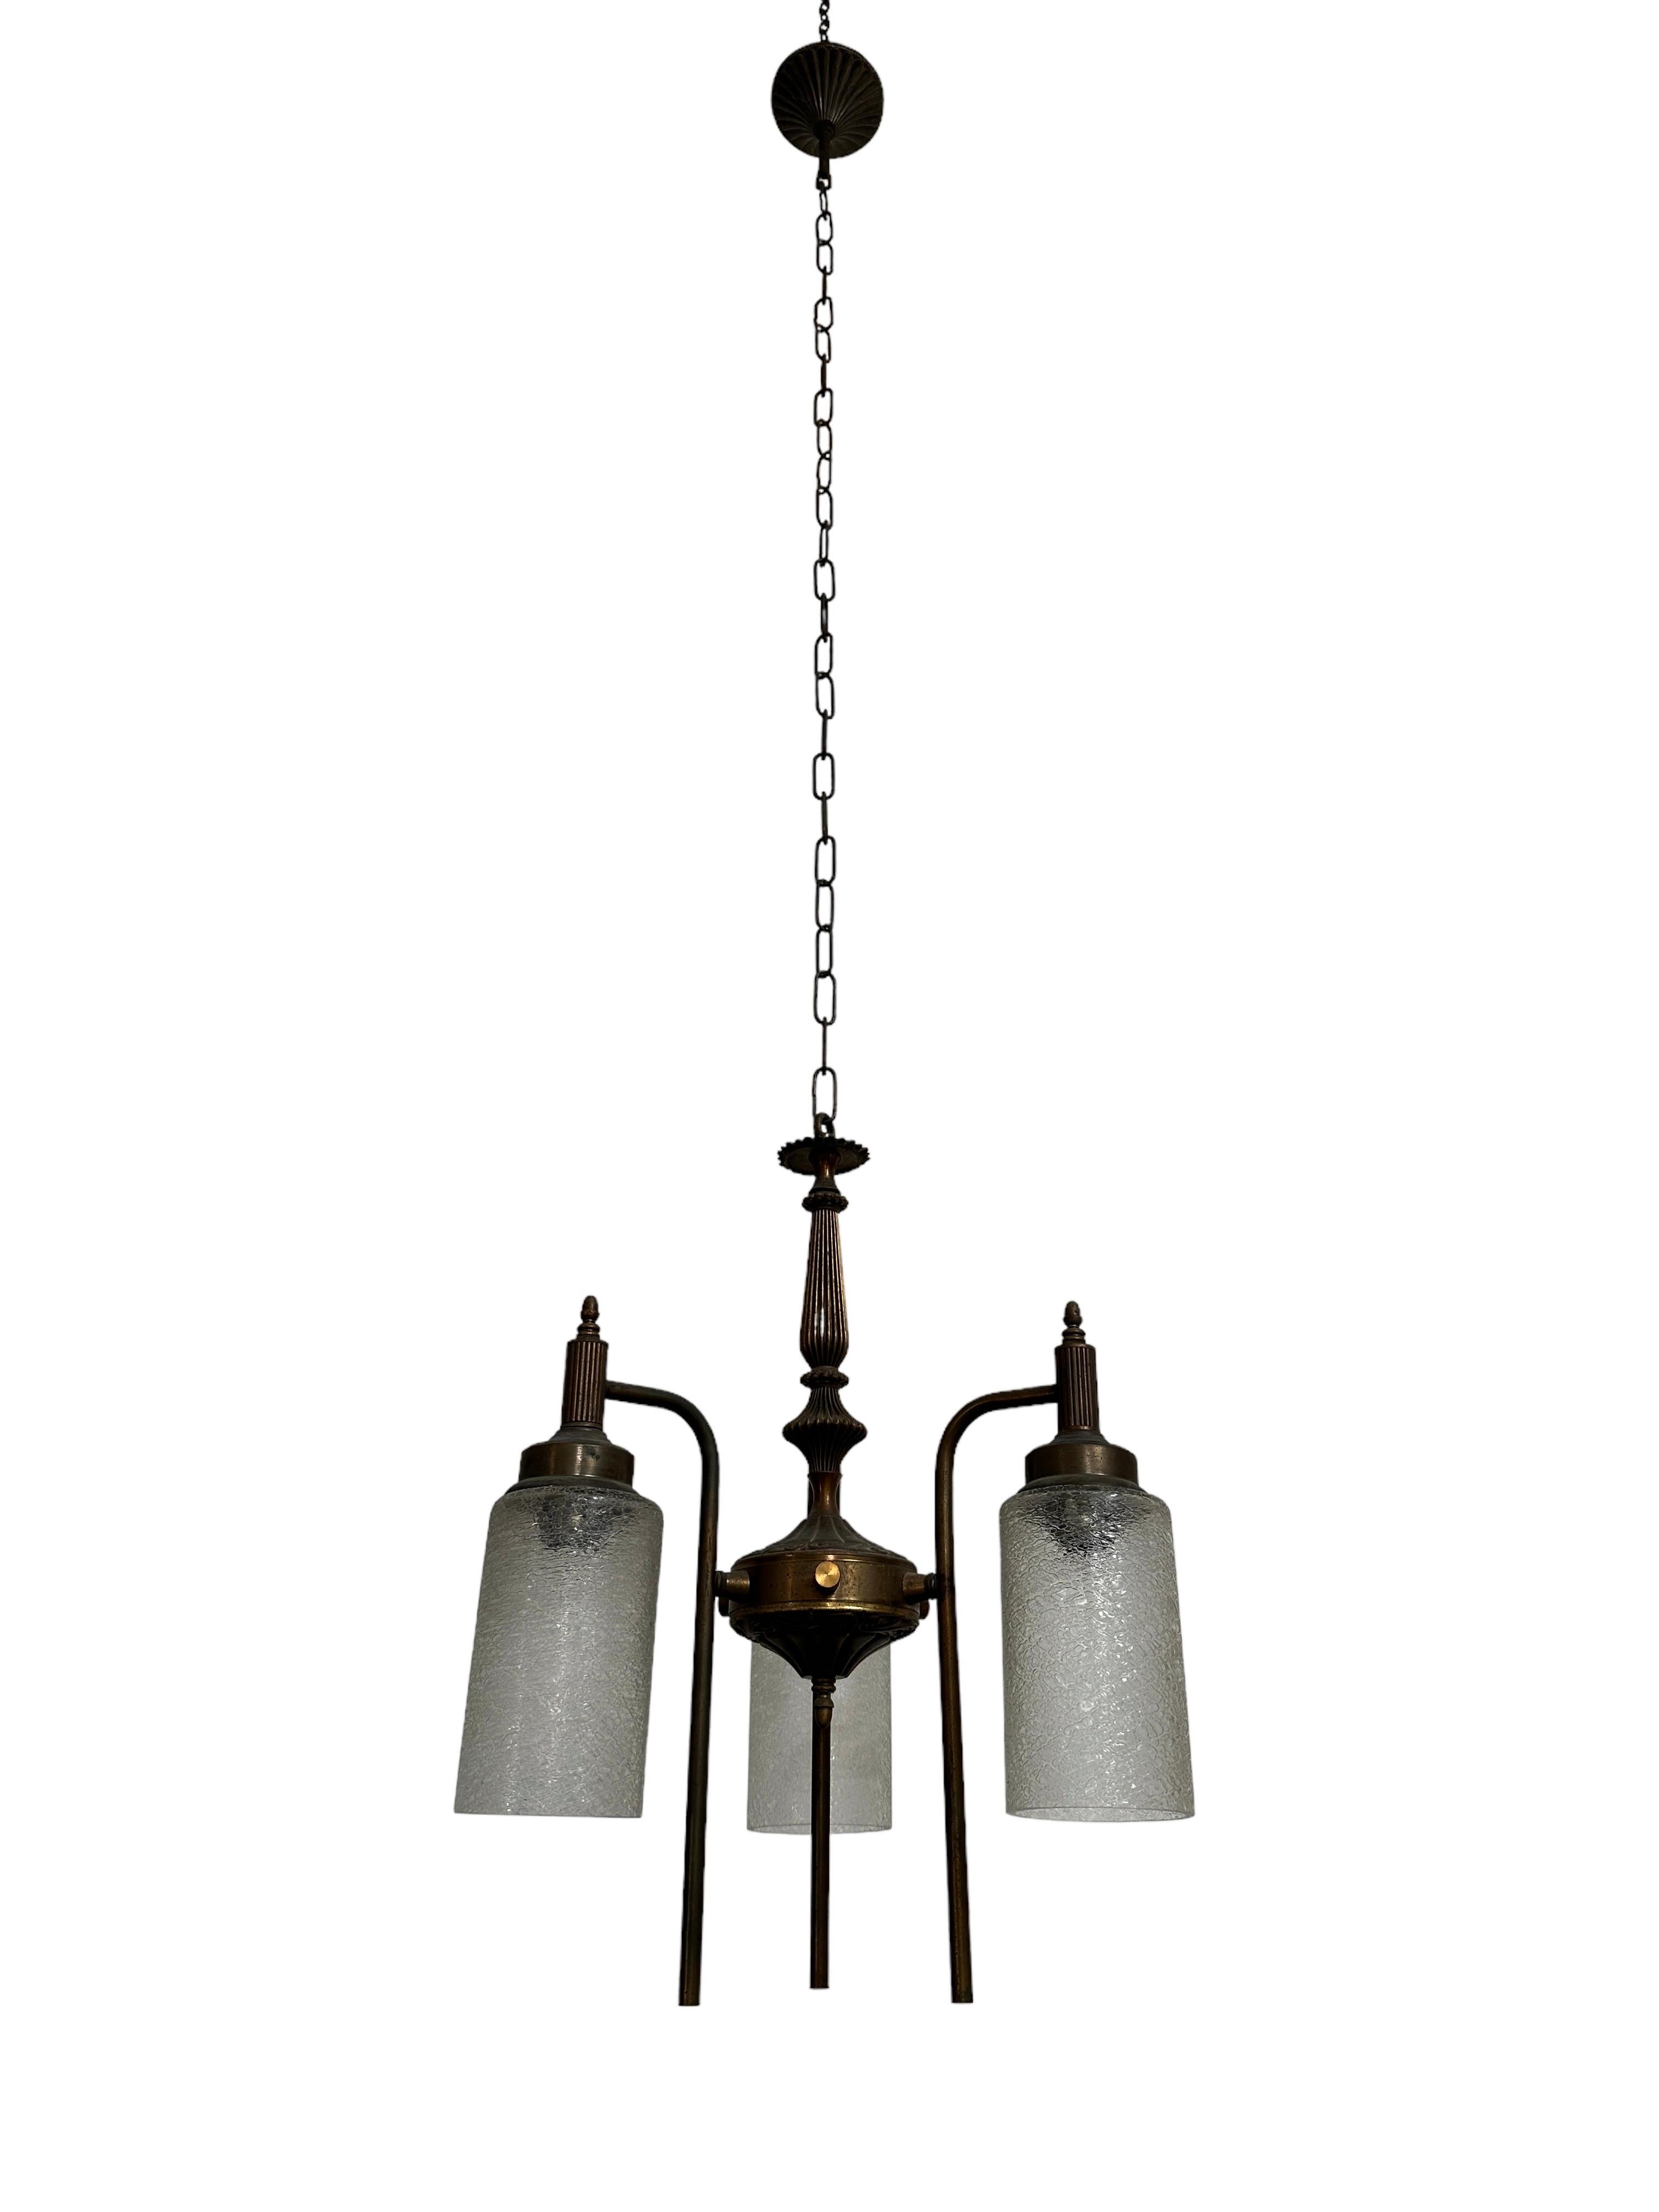 Antique Vintage German Industrial Brass Bronze Ceiling Chandelier Light Pendant In Good Condition For Sale In Sale, GB